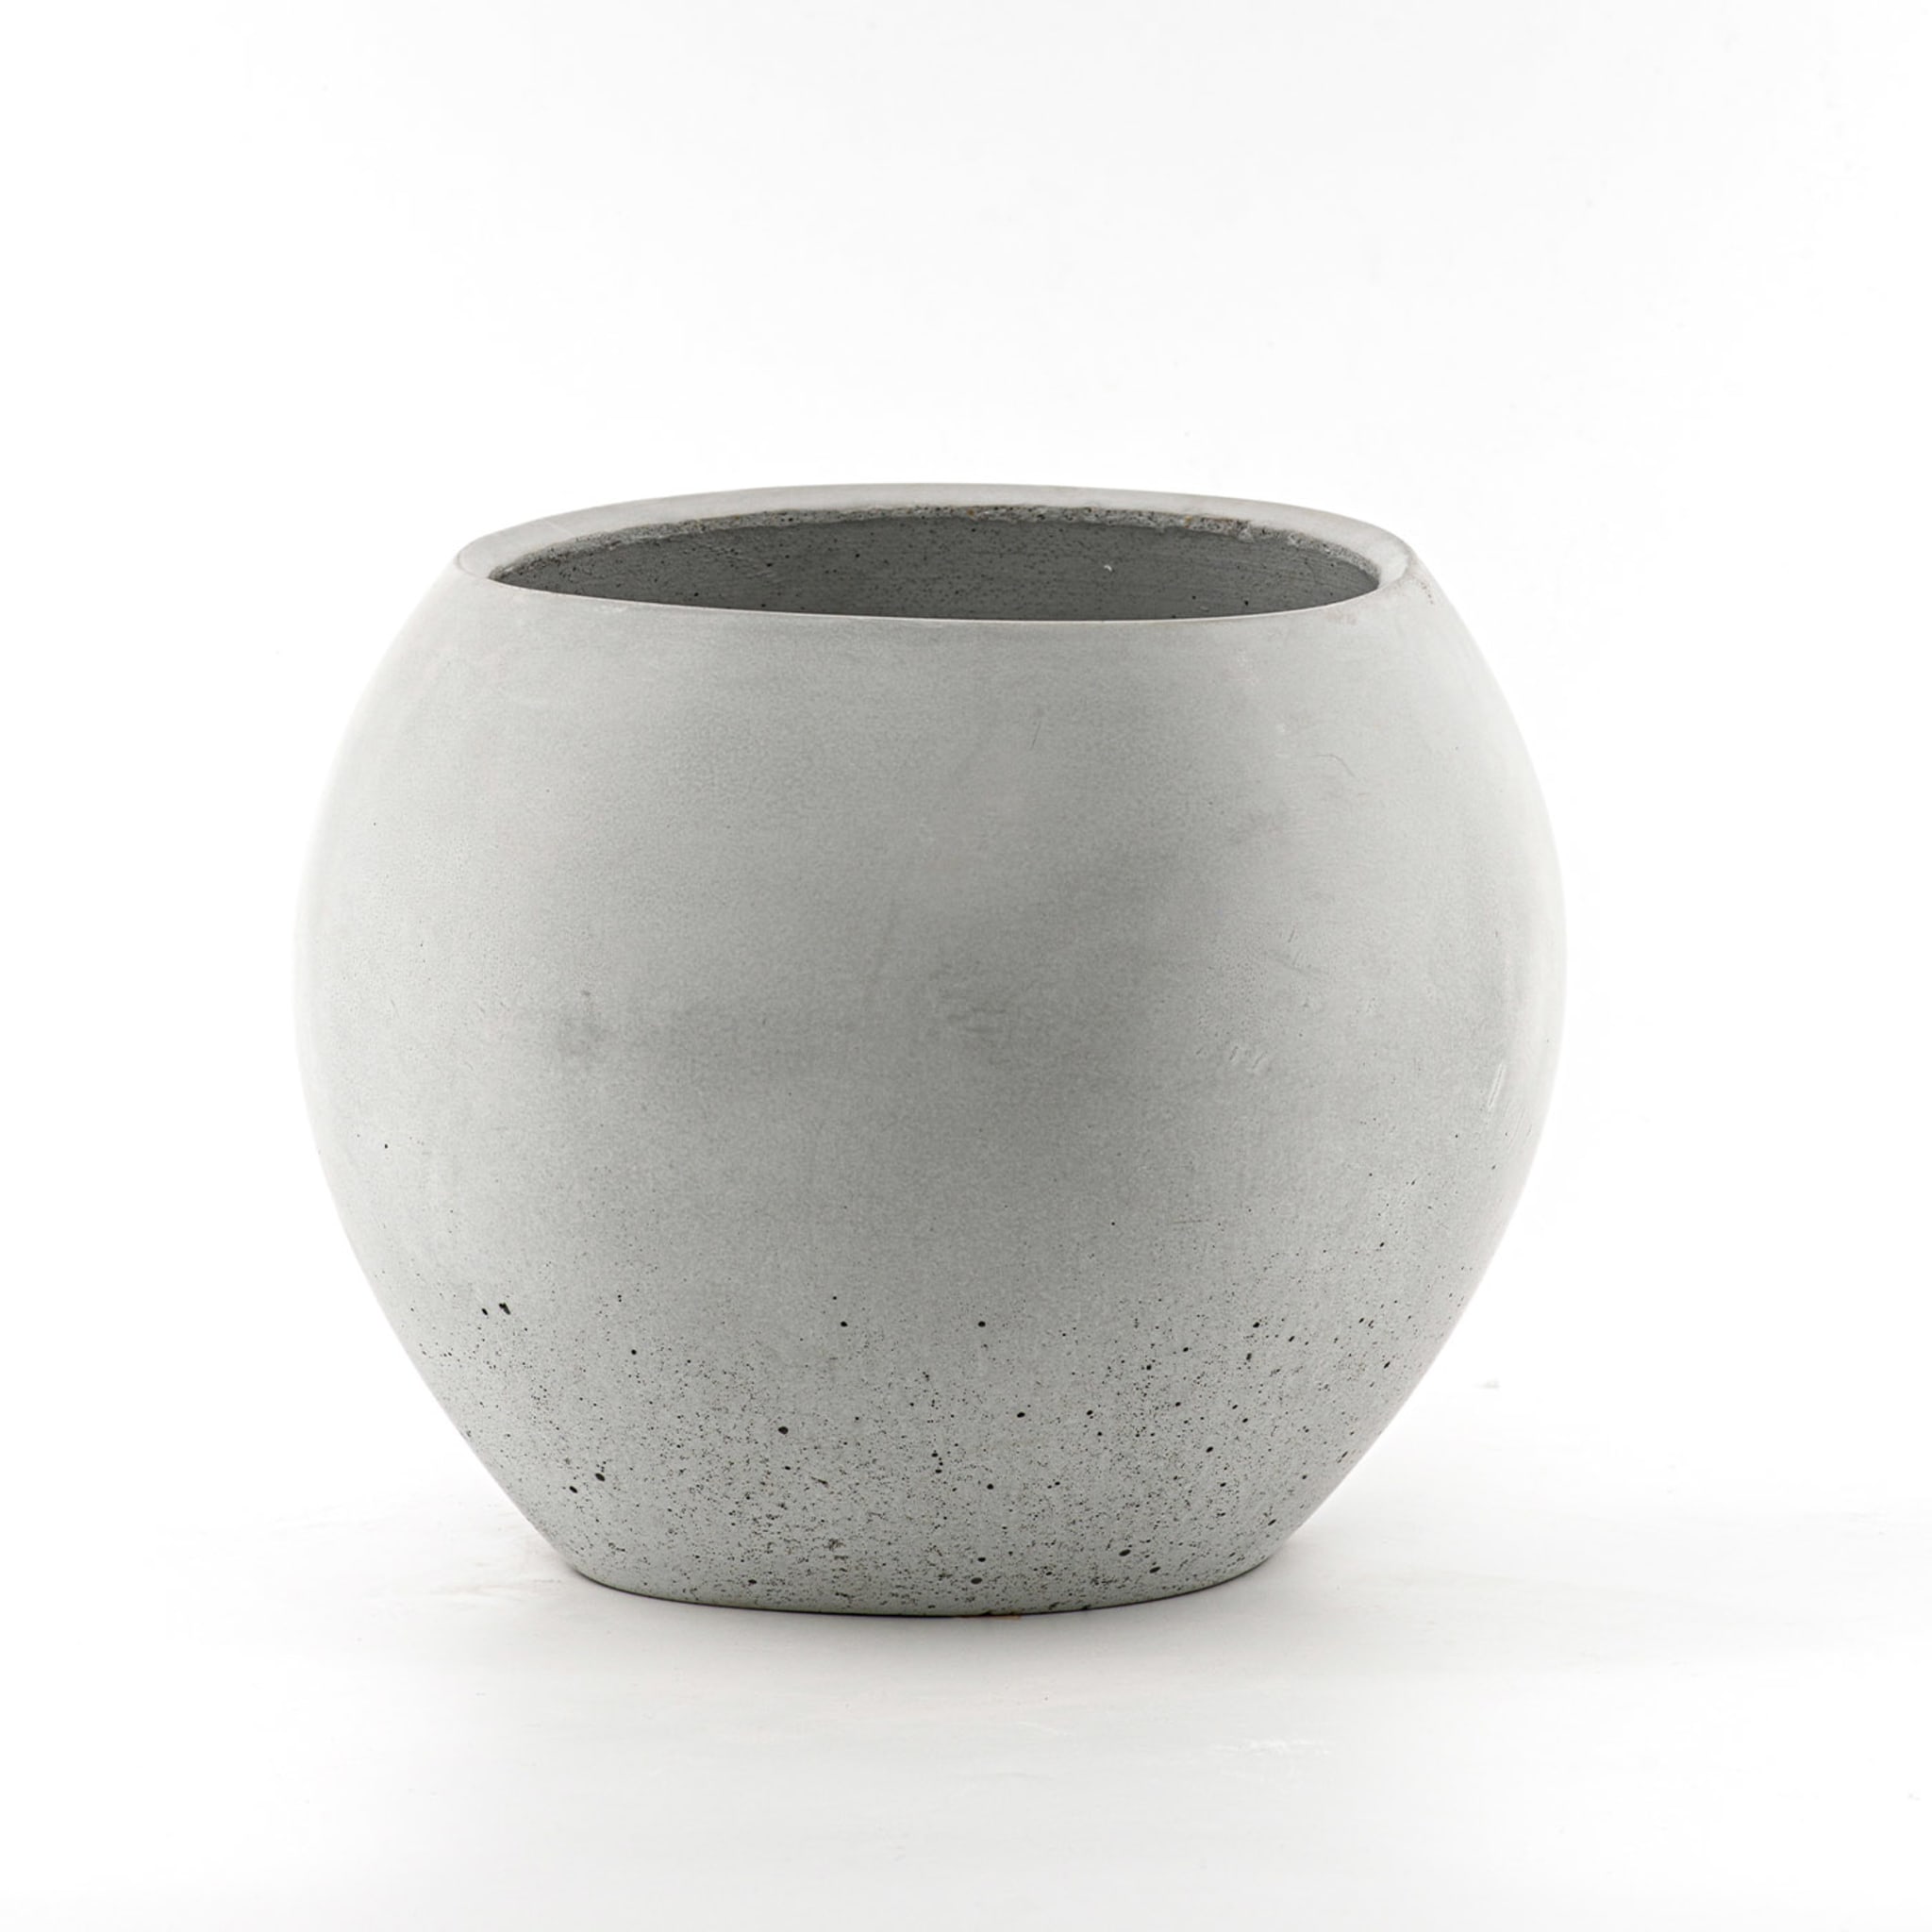 Zazen Silver Vase #1 - Alternative view 1